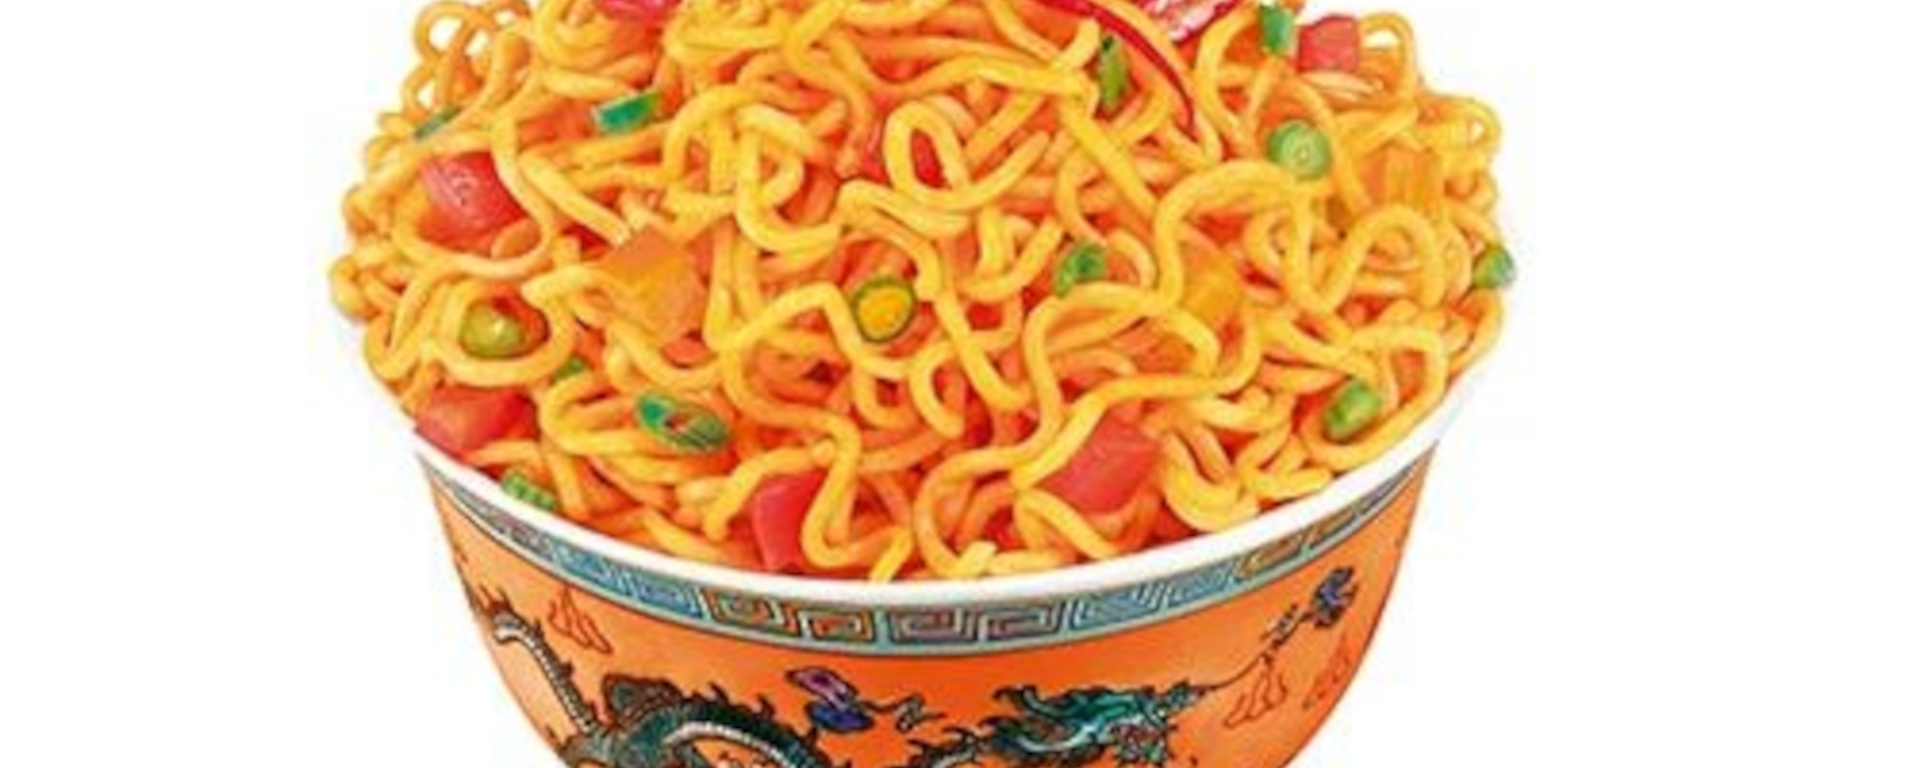 LuvMyRecipe.com - Schezwan Instant Noodles Featured